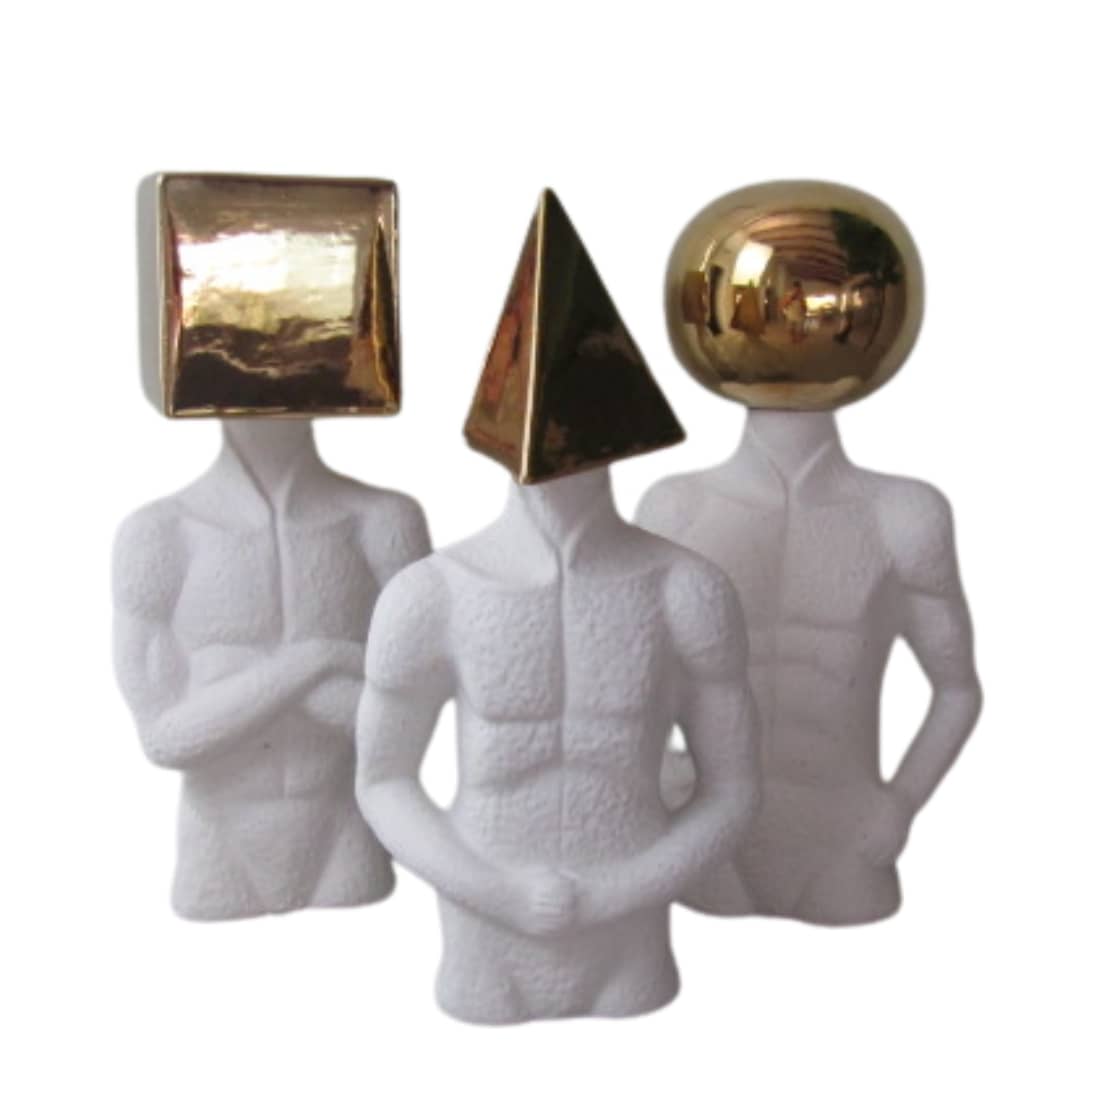 Set of three figurines with geo shaped heads